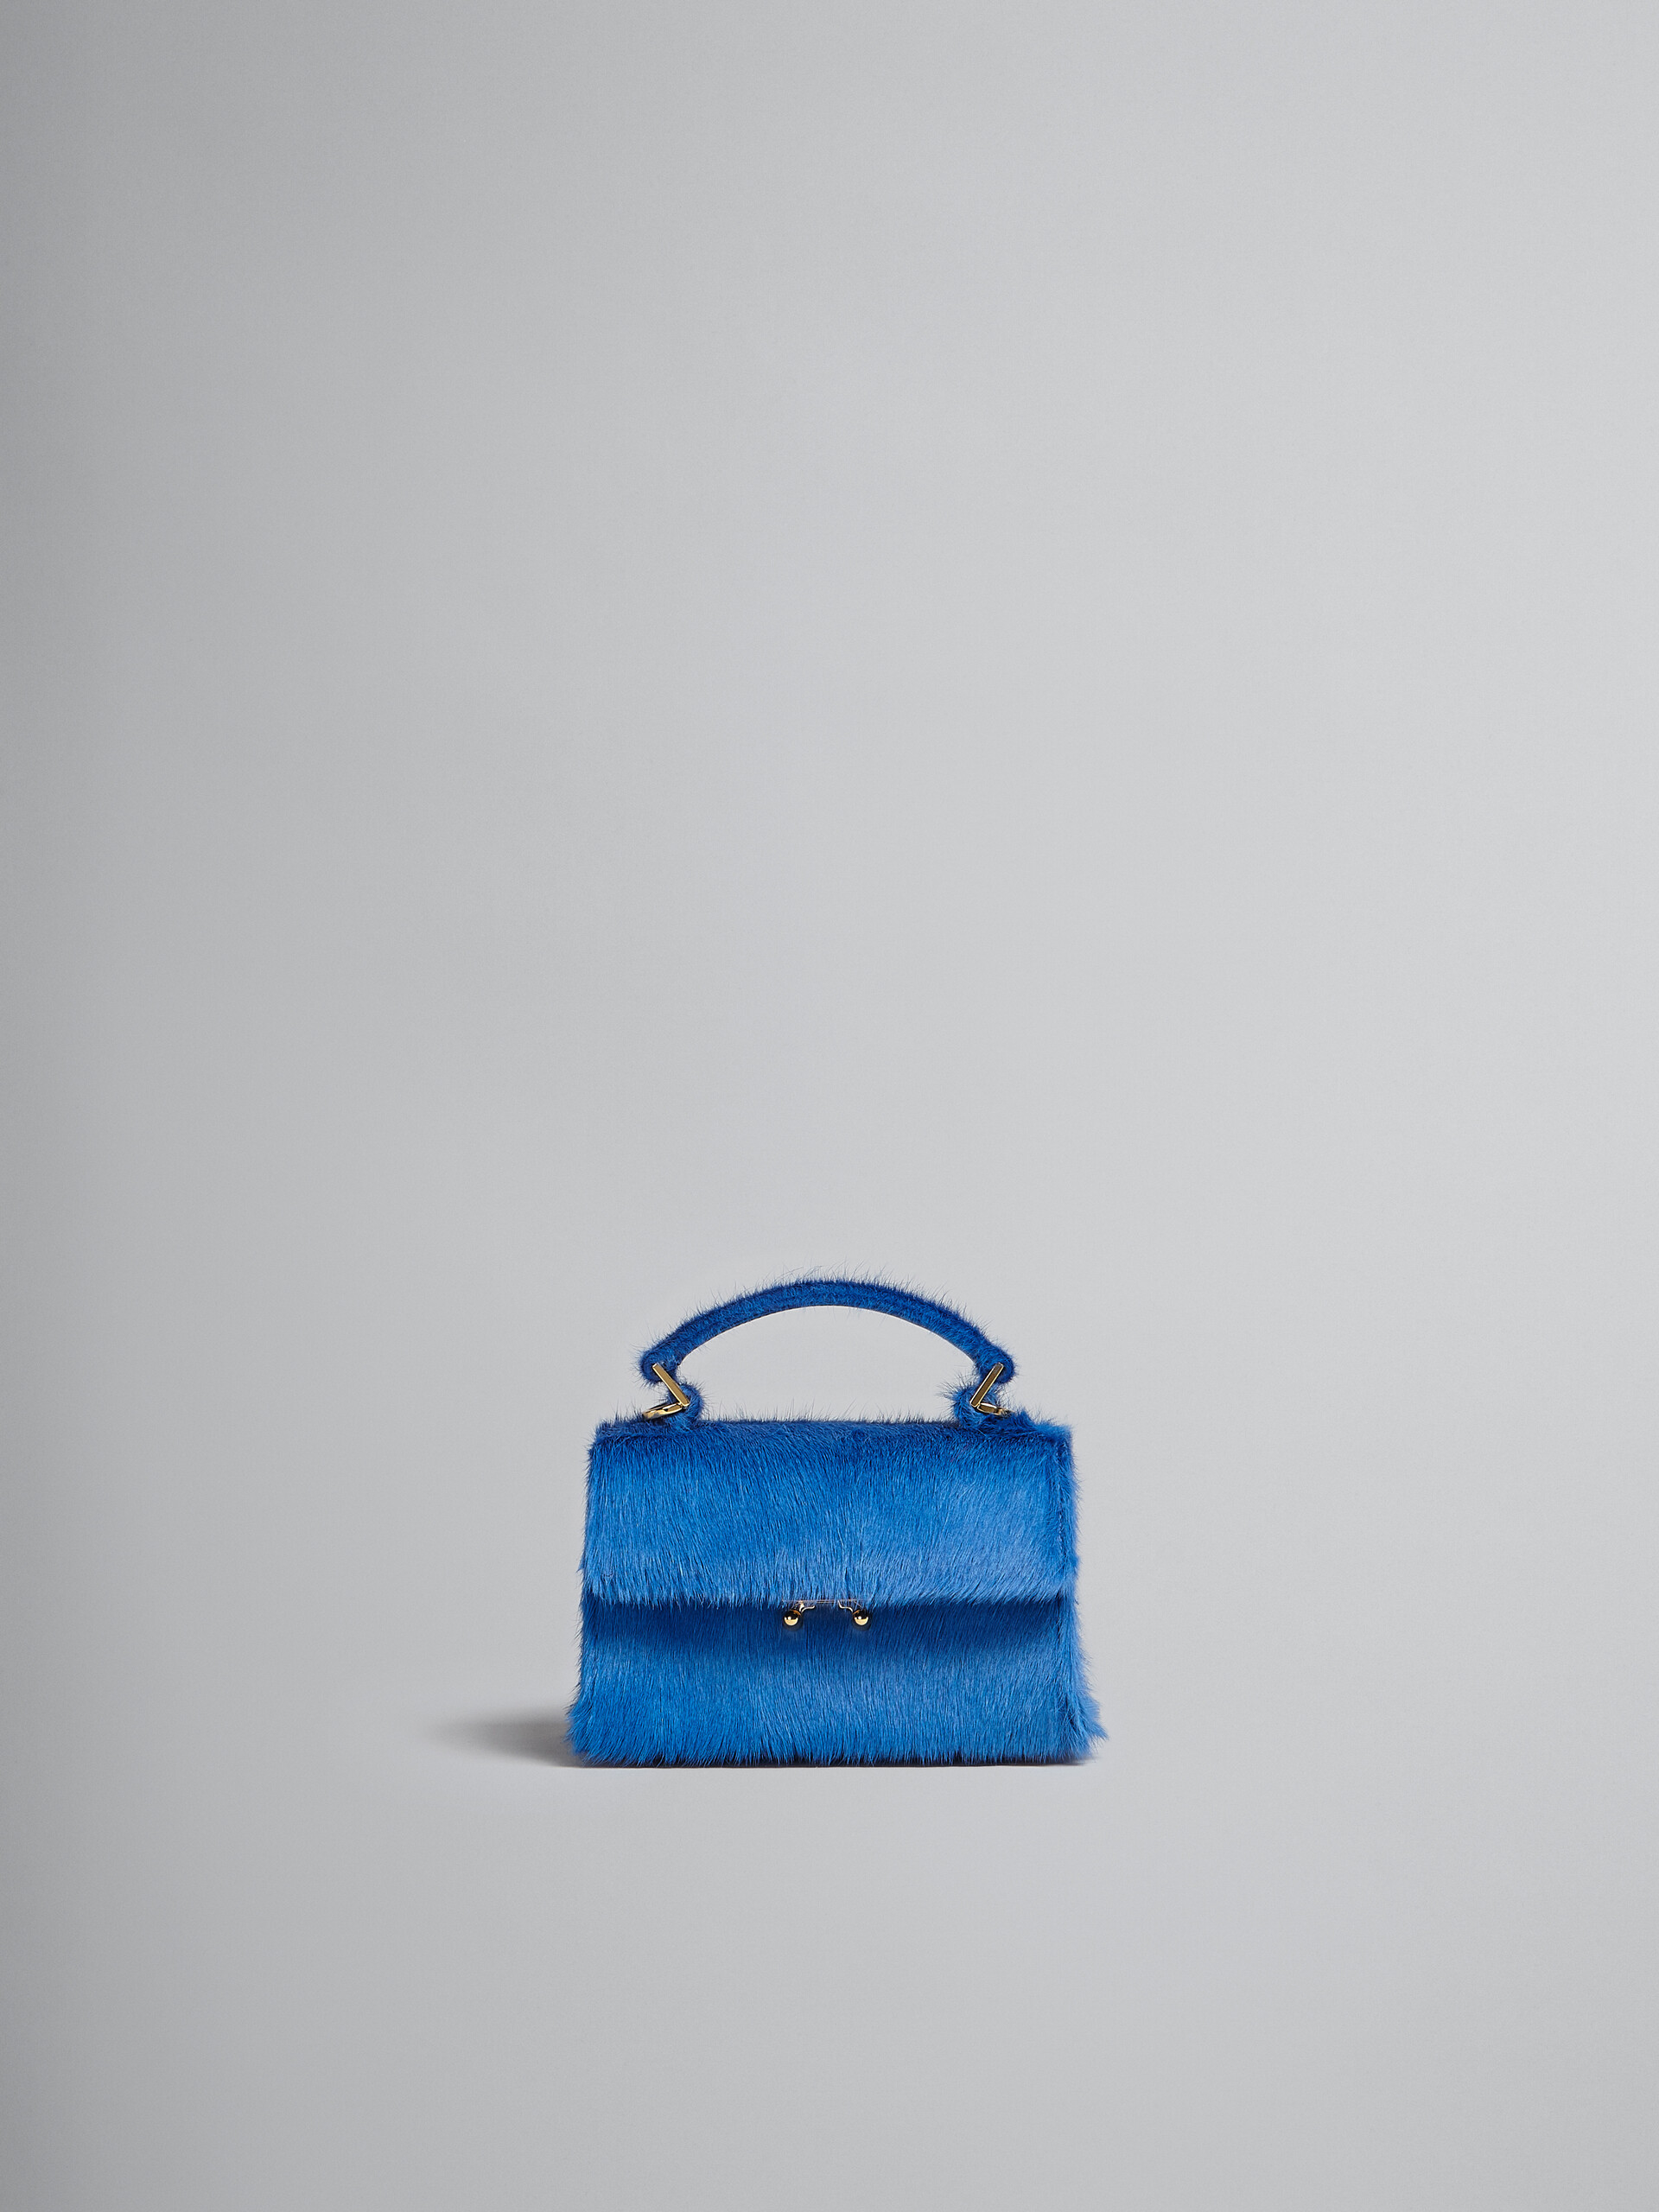 Relativity Mini Bag in blue long hair calfskin - Handbag - Image 1